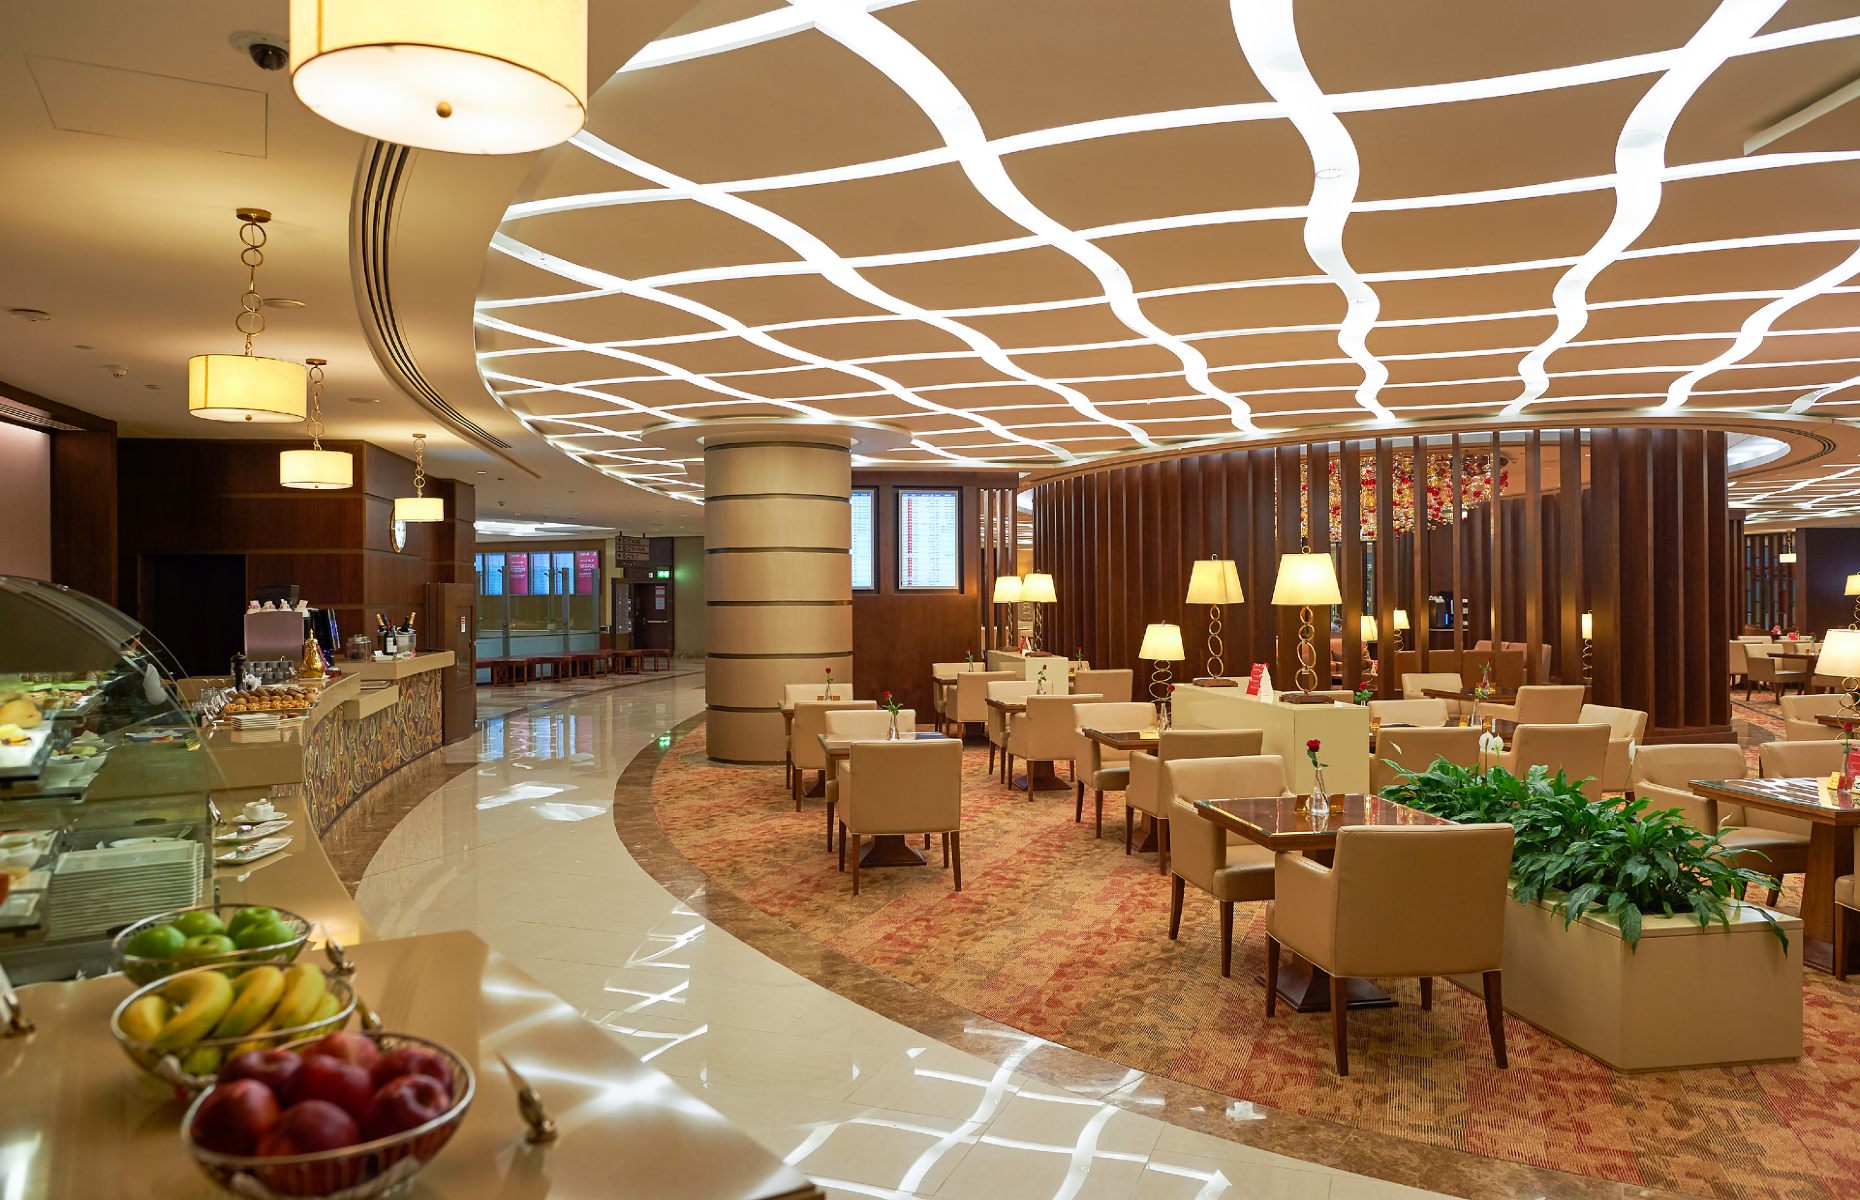 Emirates First Class lounge (Image: Sorbis/Shutterstock)